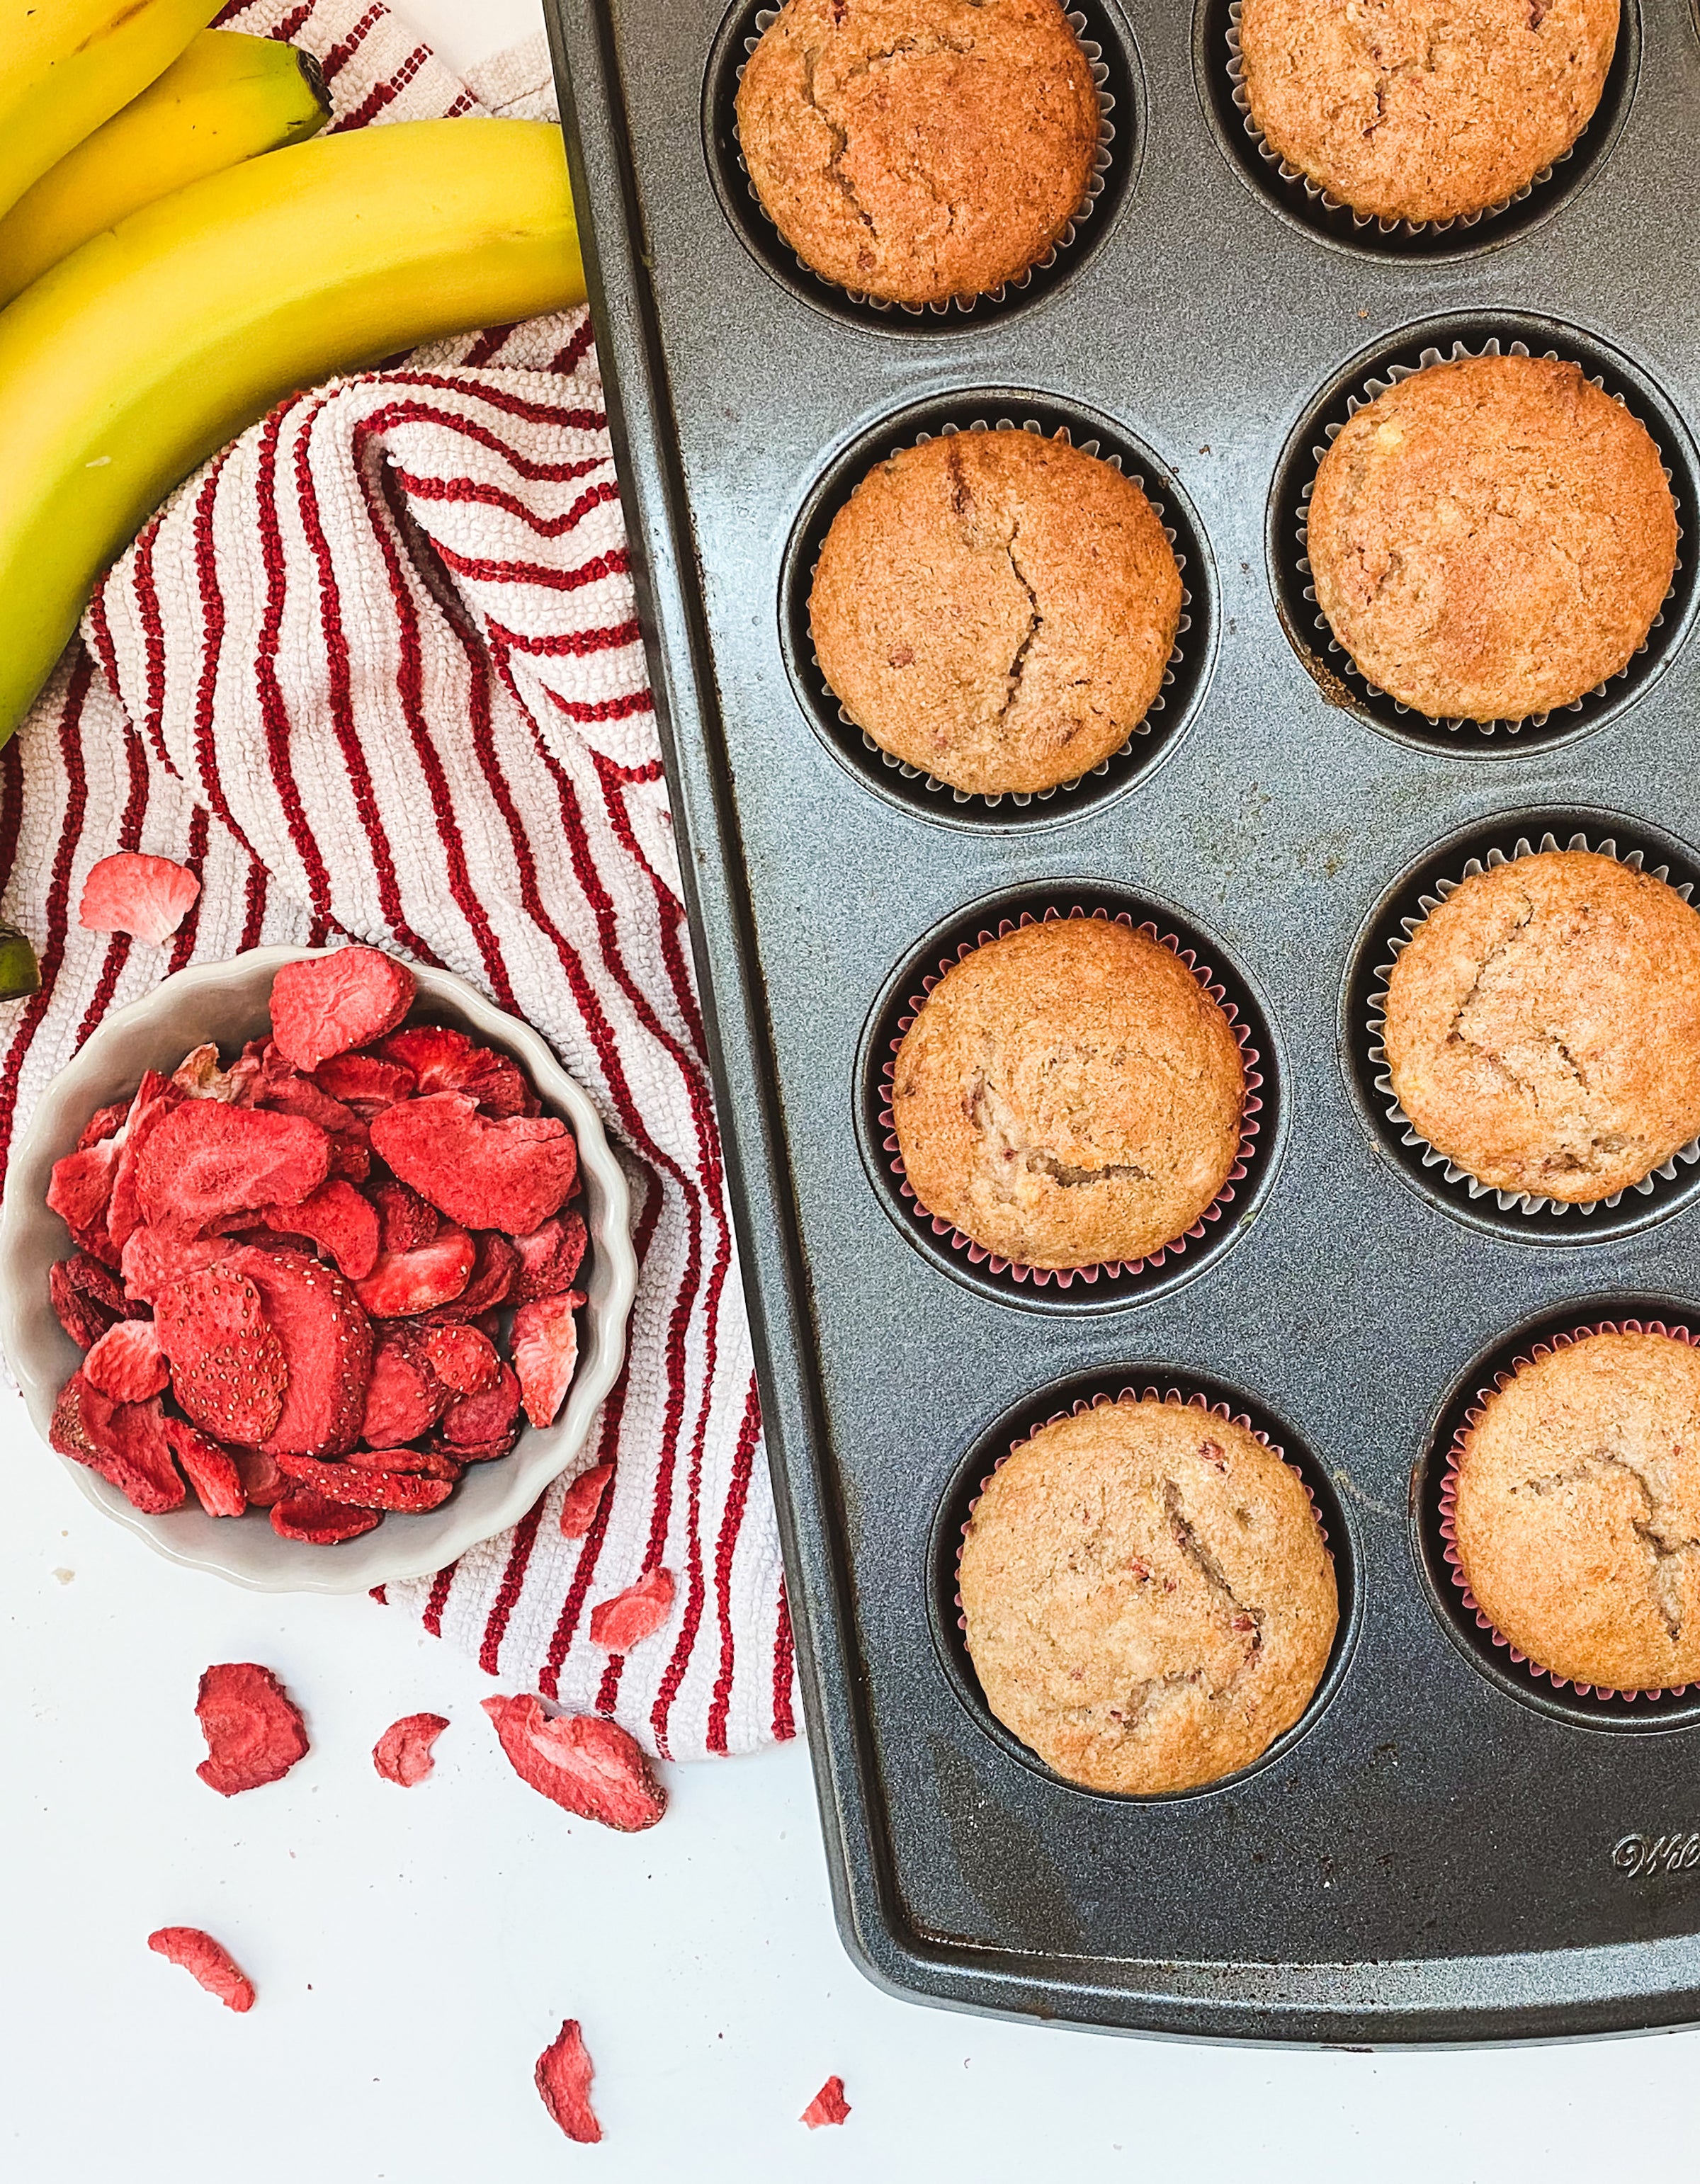 Strawberry Banana Muffins with Thrive Life